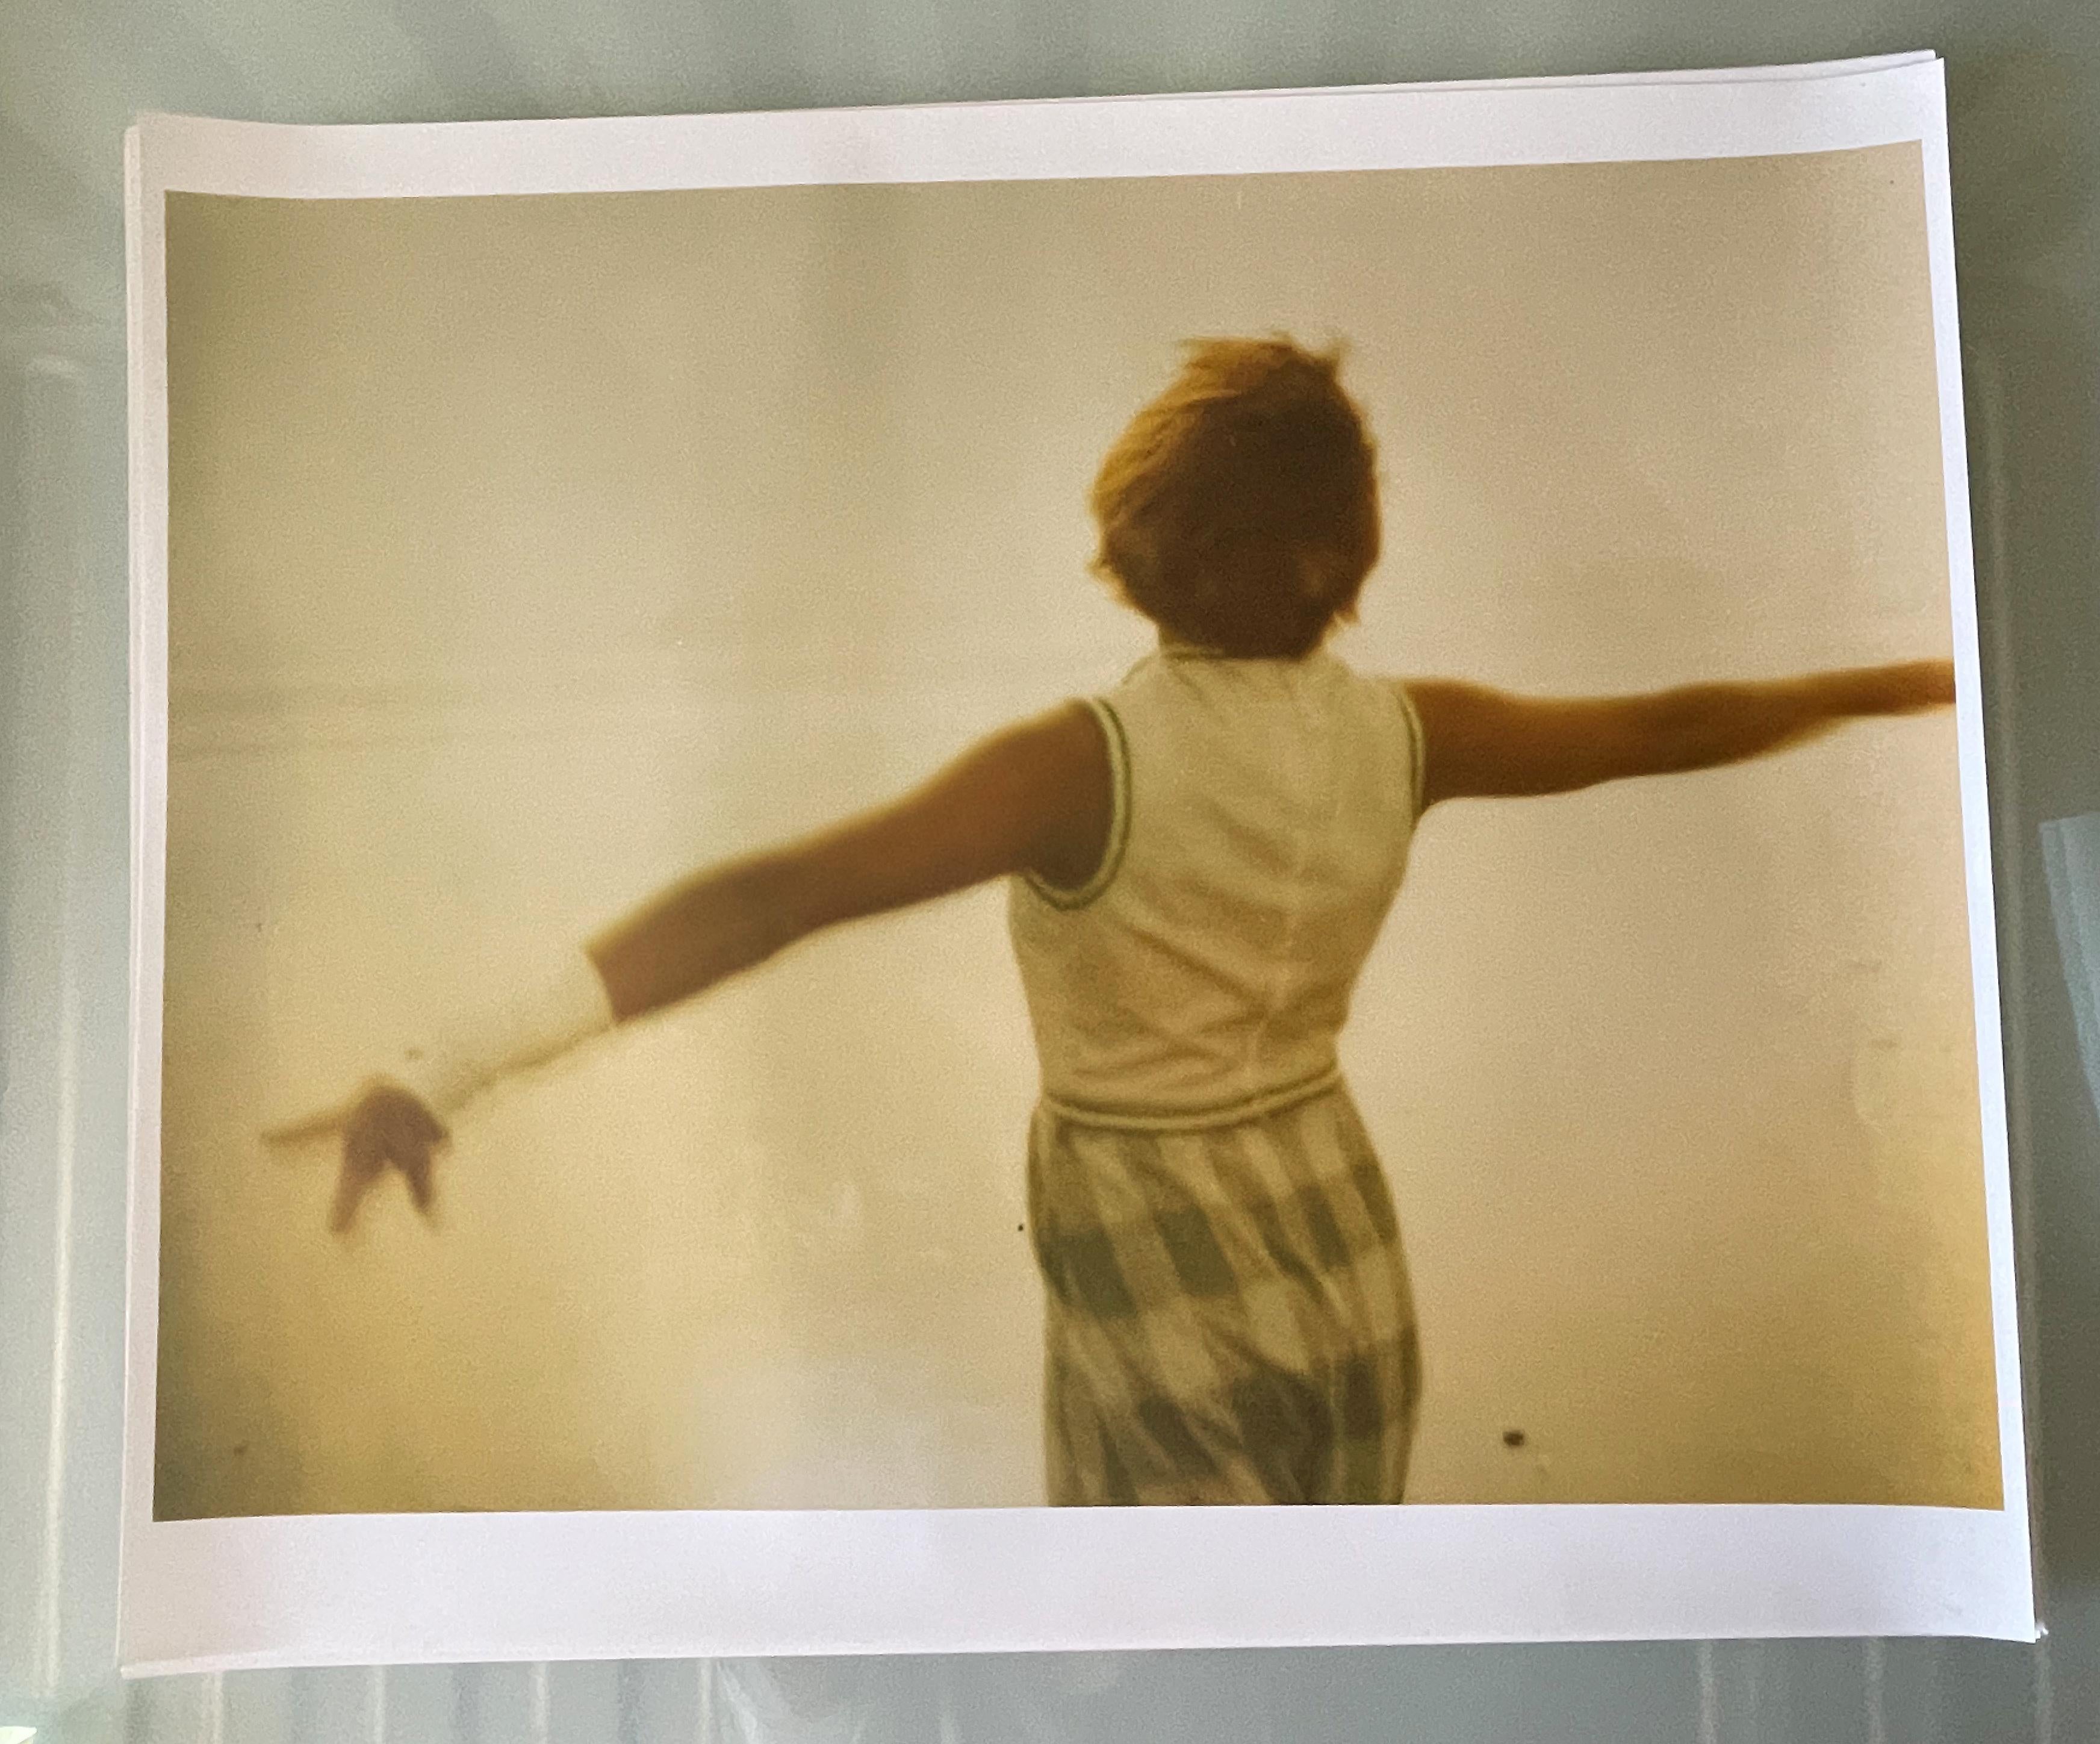 Dancer on the Beach II (Stranger than Paradise) - Analog, hand-print, Polaroid - Photograph by Stefanie Schneider